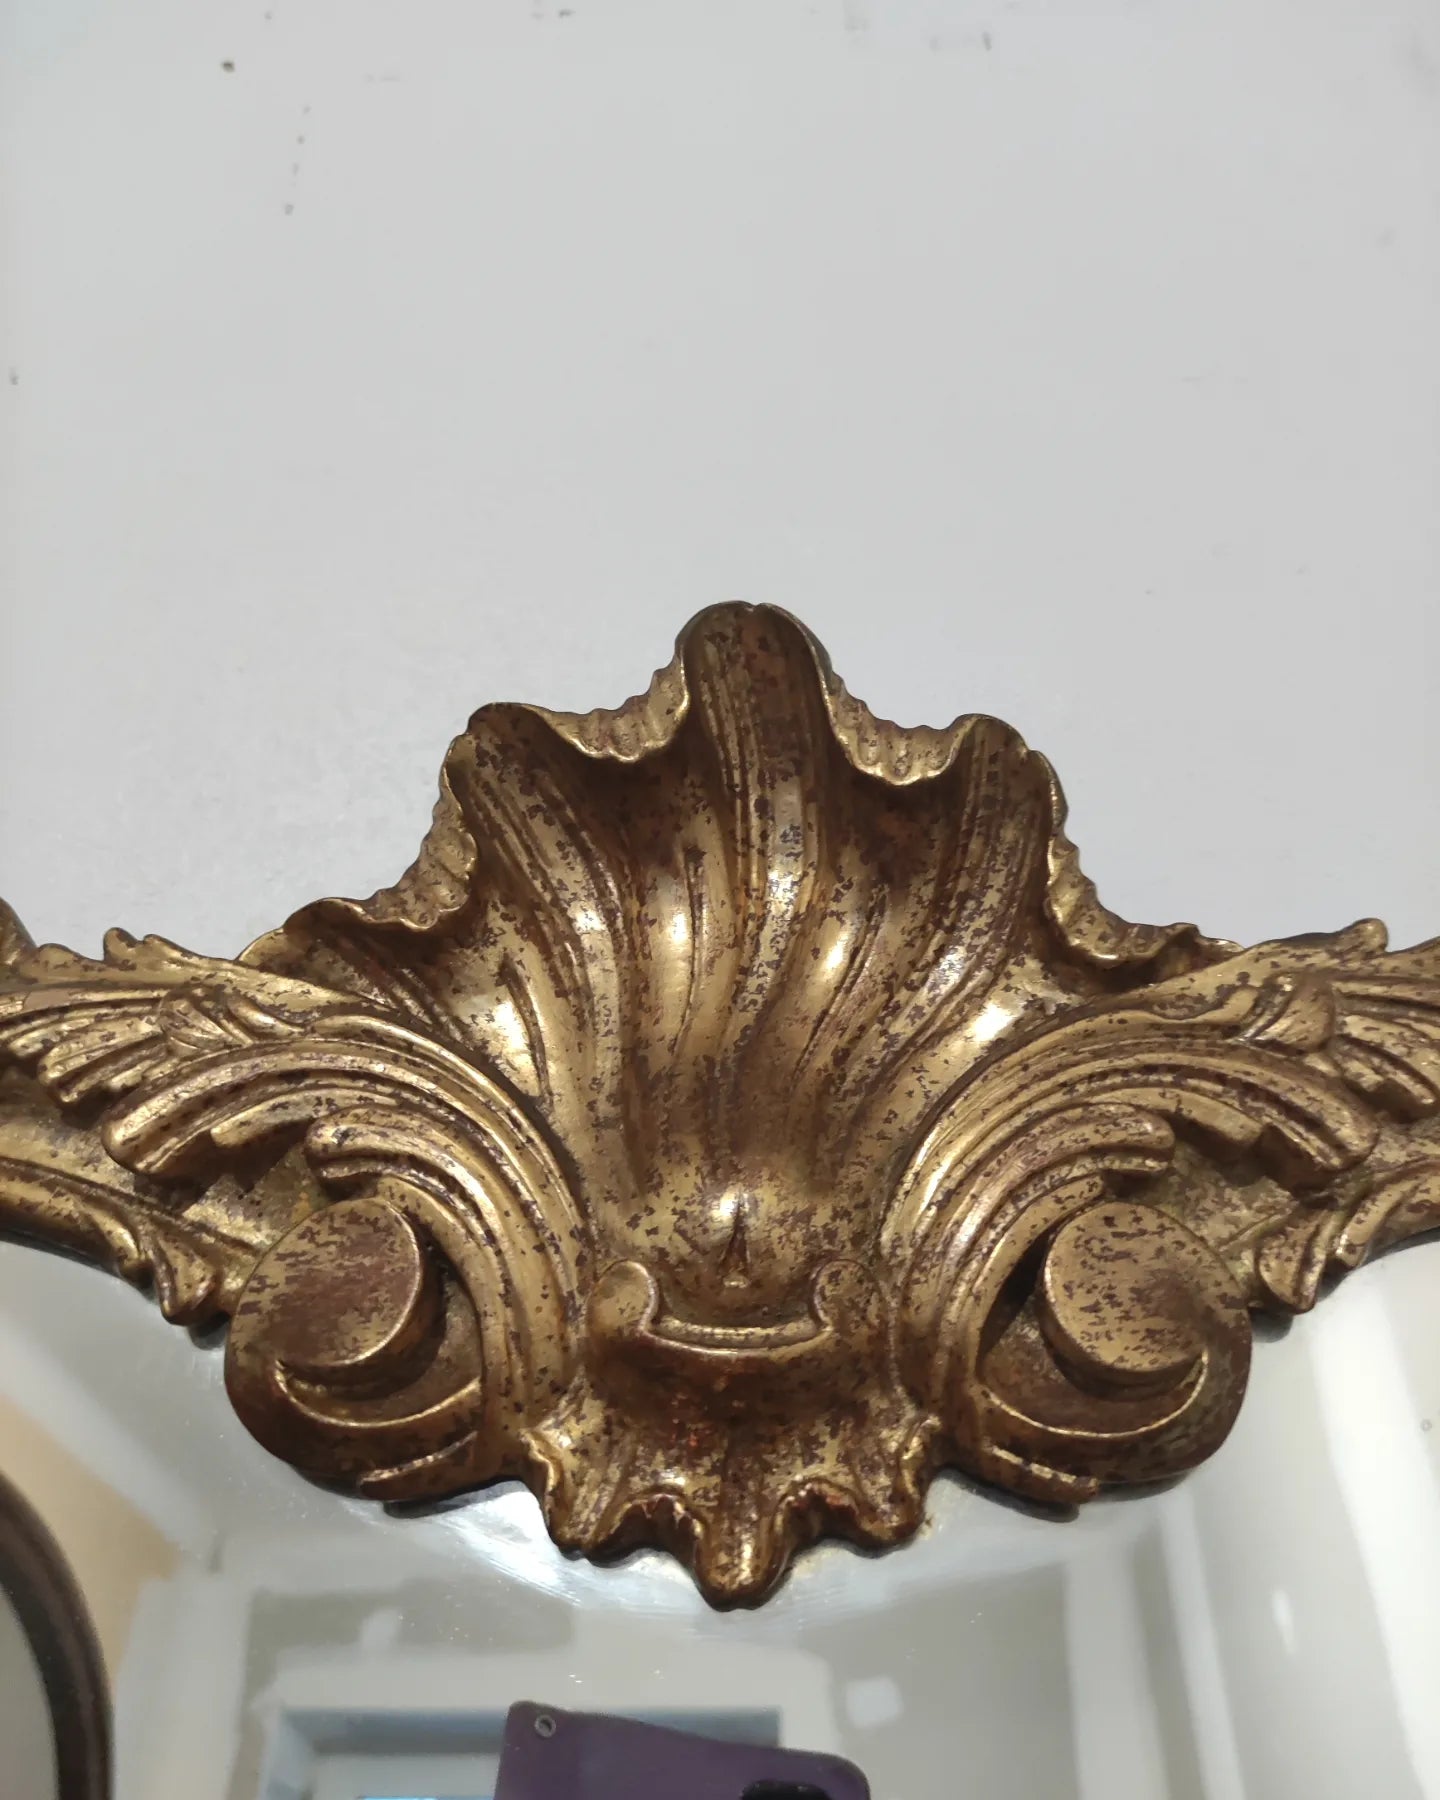 Grand miroir style Louis XV